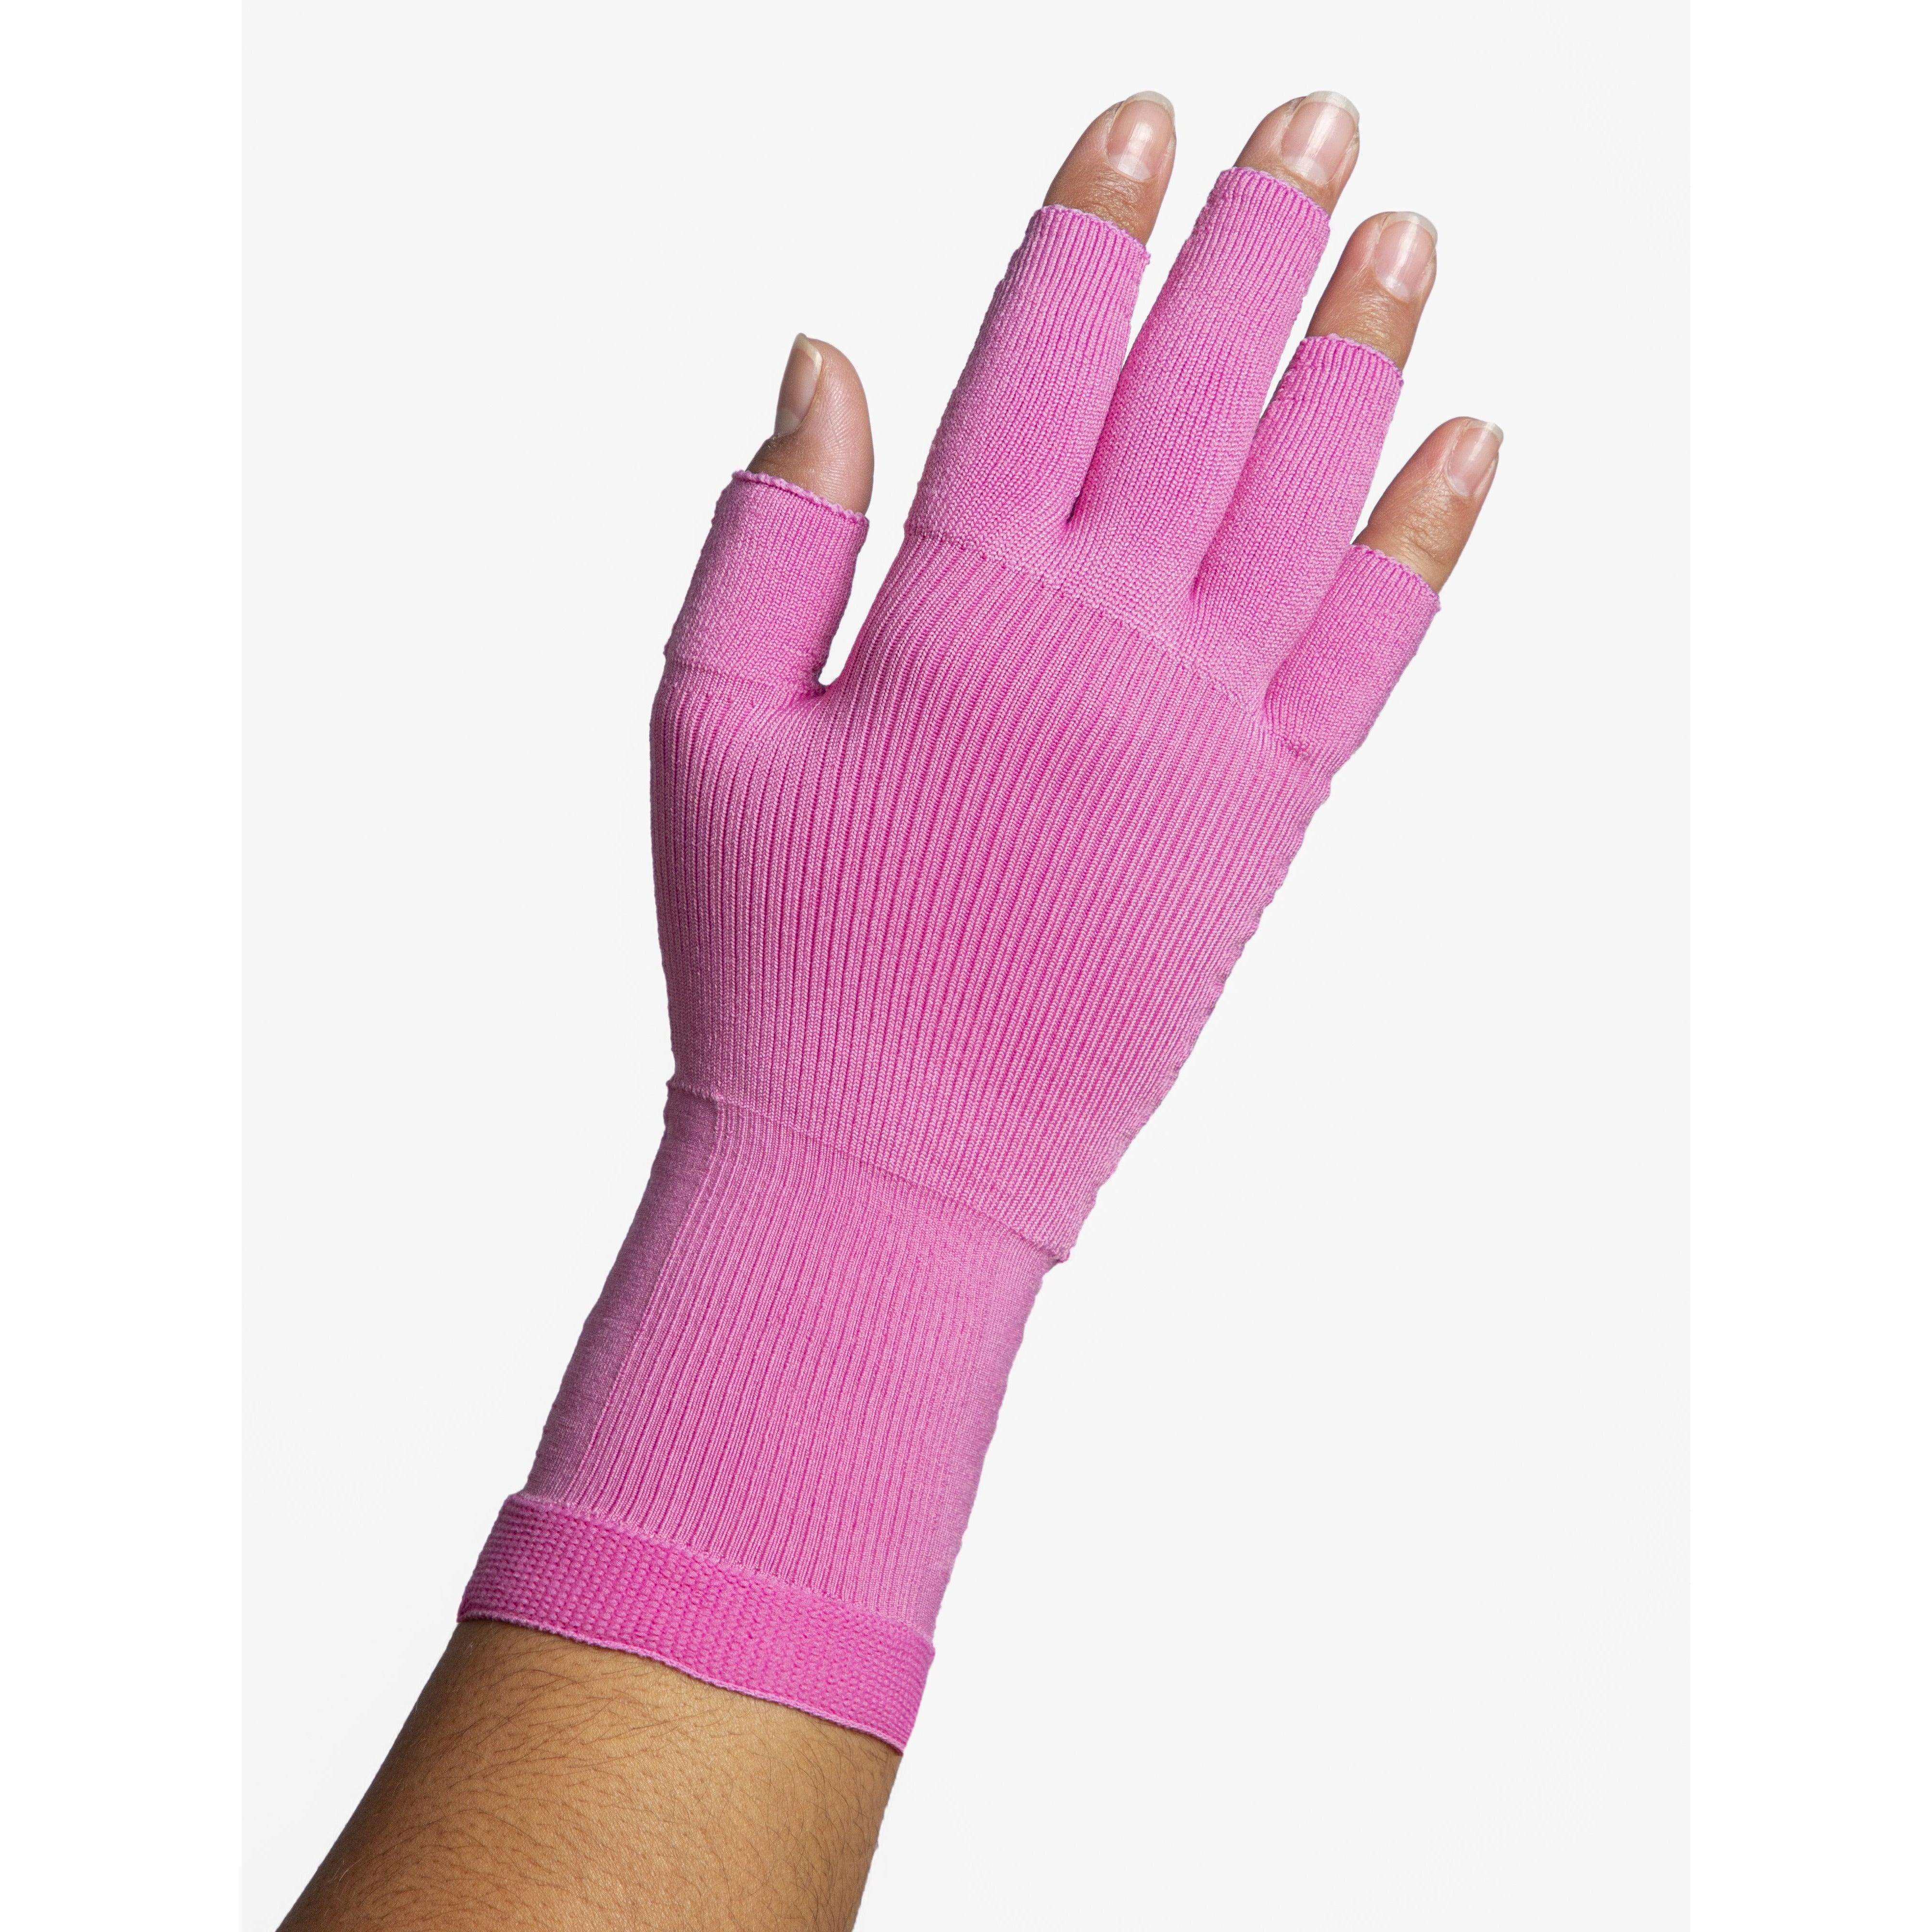 Sigvaris Secure 20-30 mmHg Glove, Dusty Rose